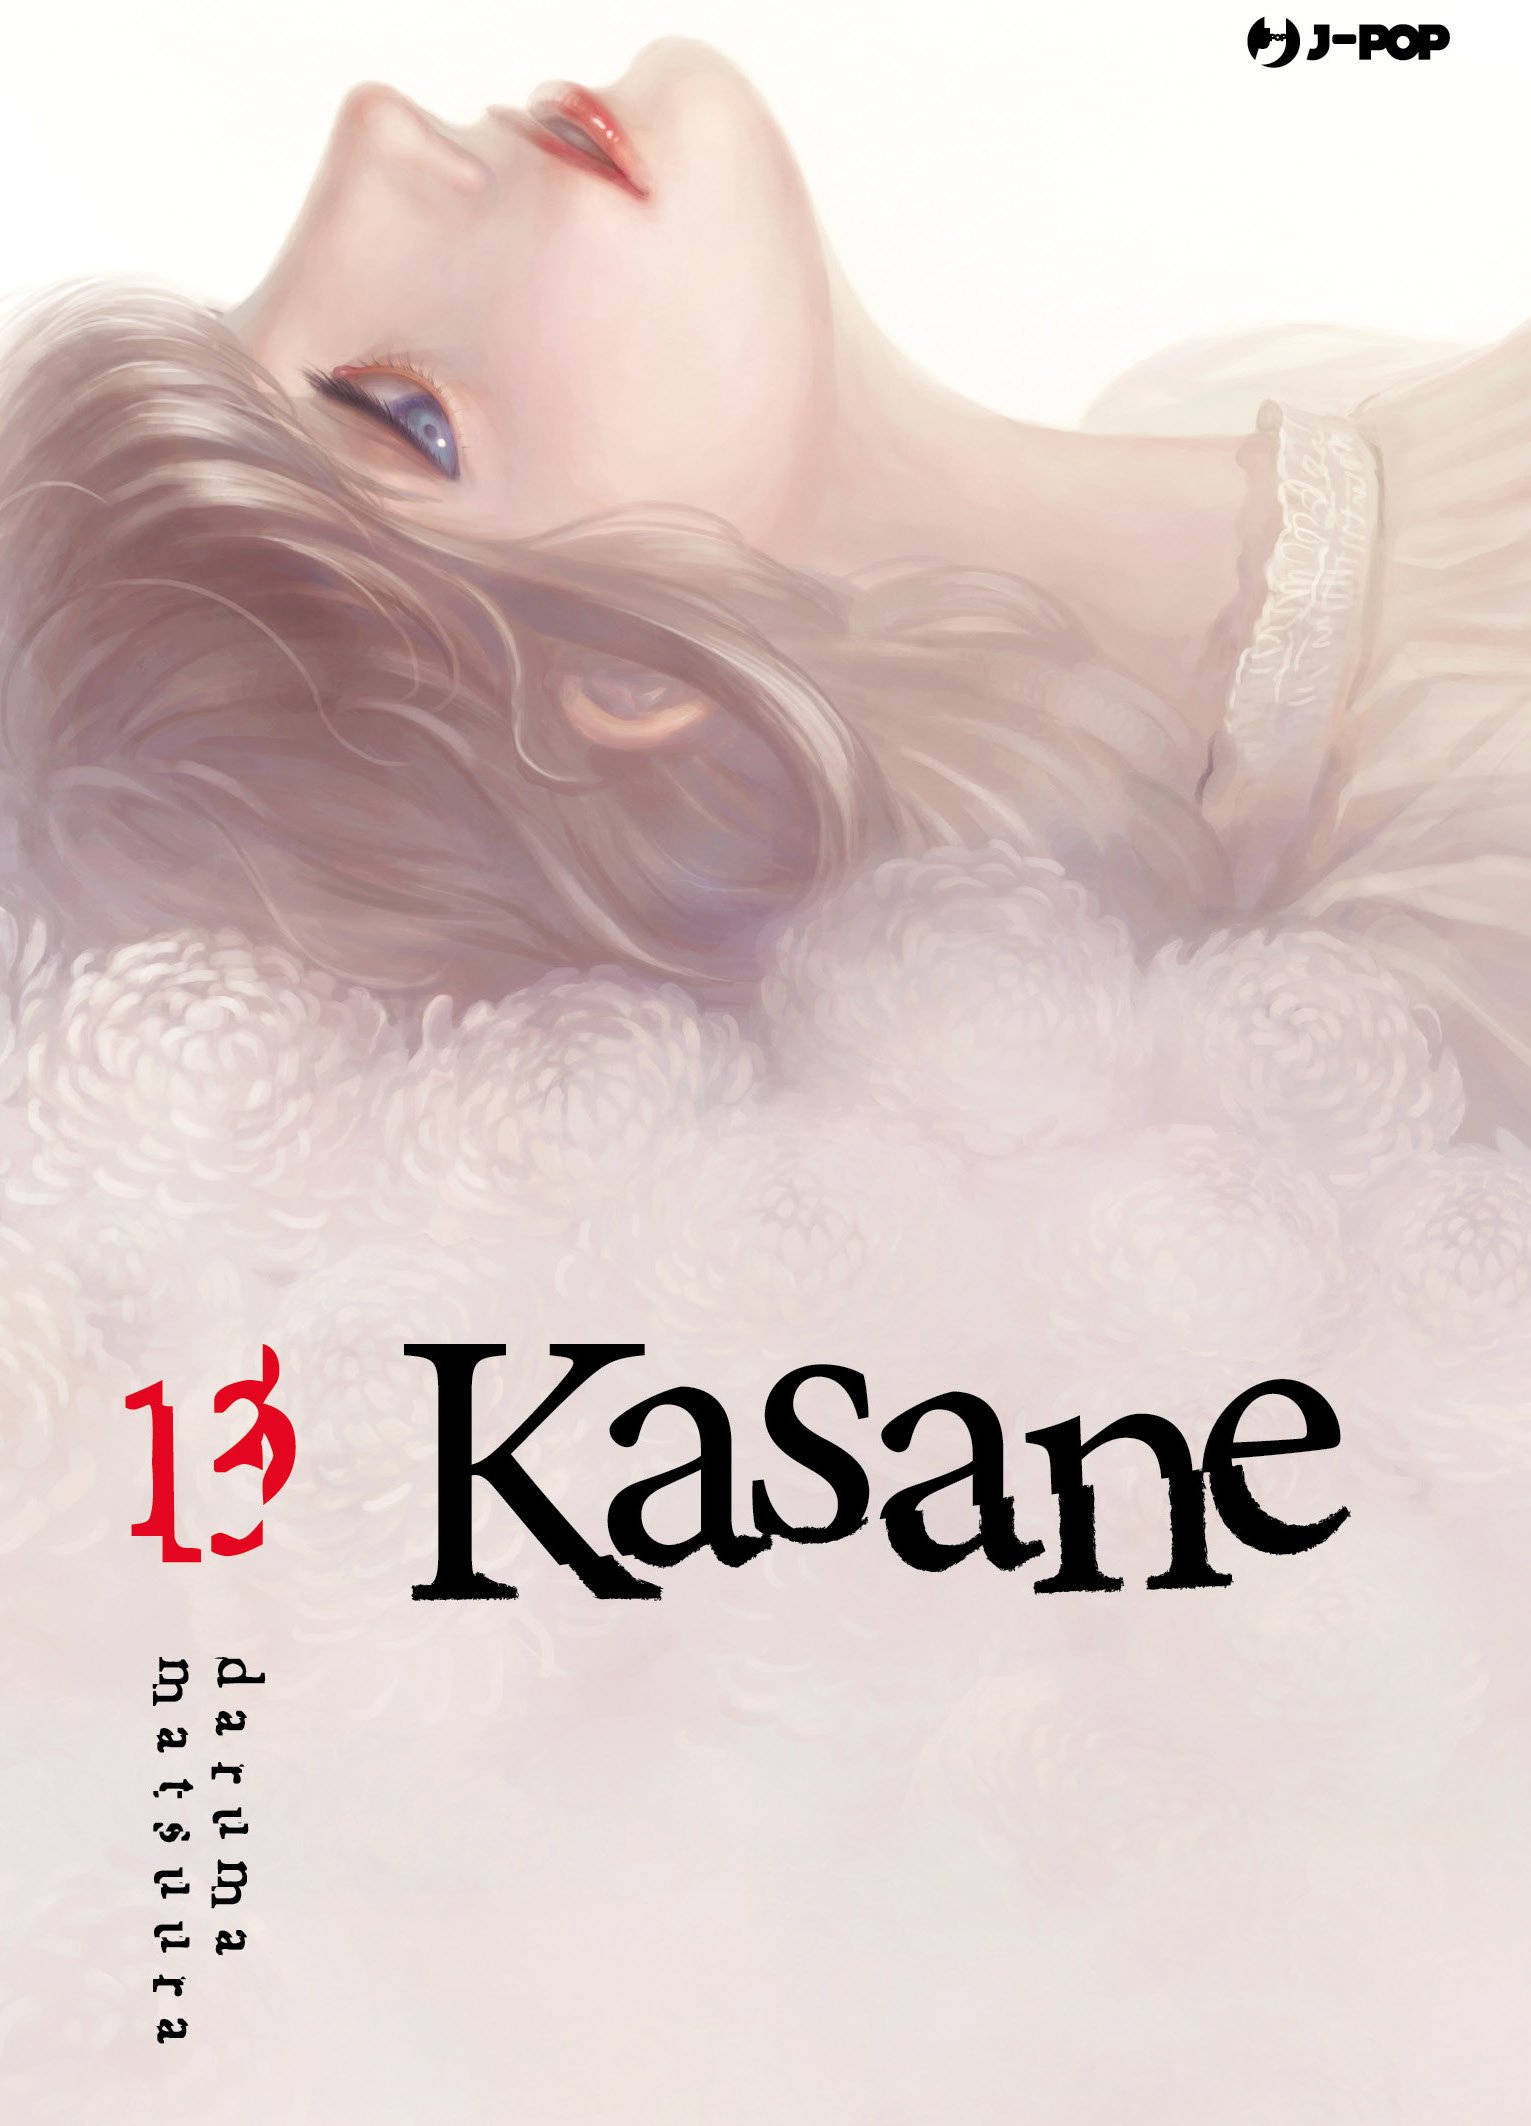 Kasane 13, tra leuscite J-POP Manga del 09 giugno 2022